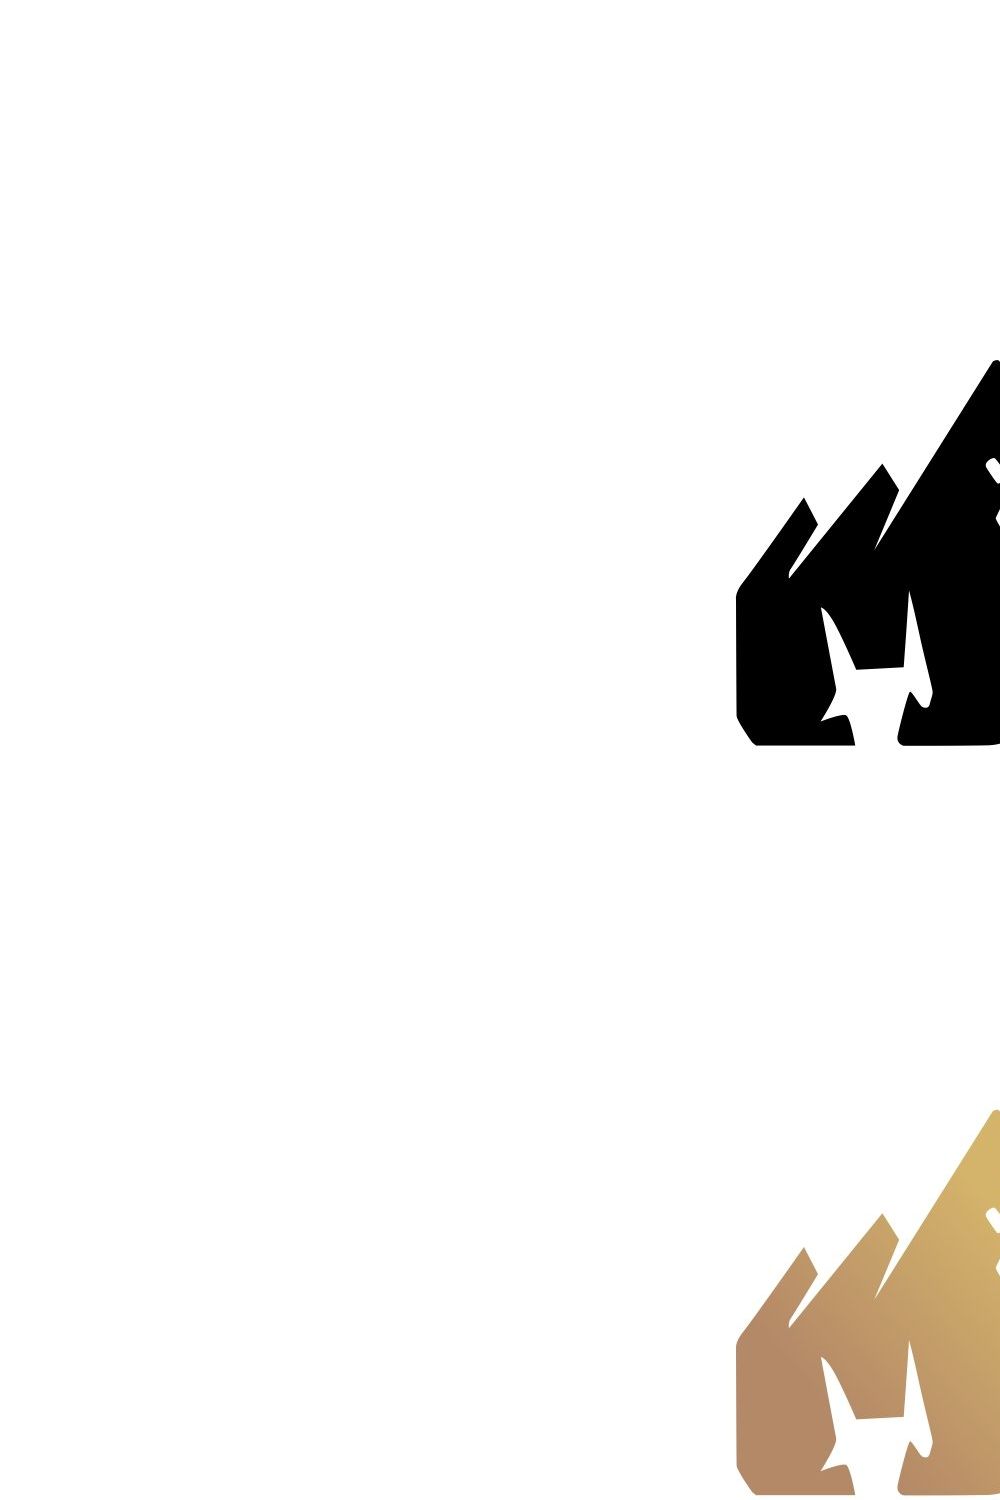 Gorilla Mountain Logo pinterest preview image.